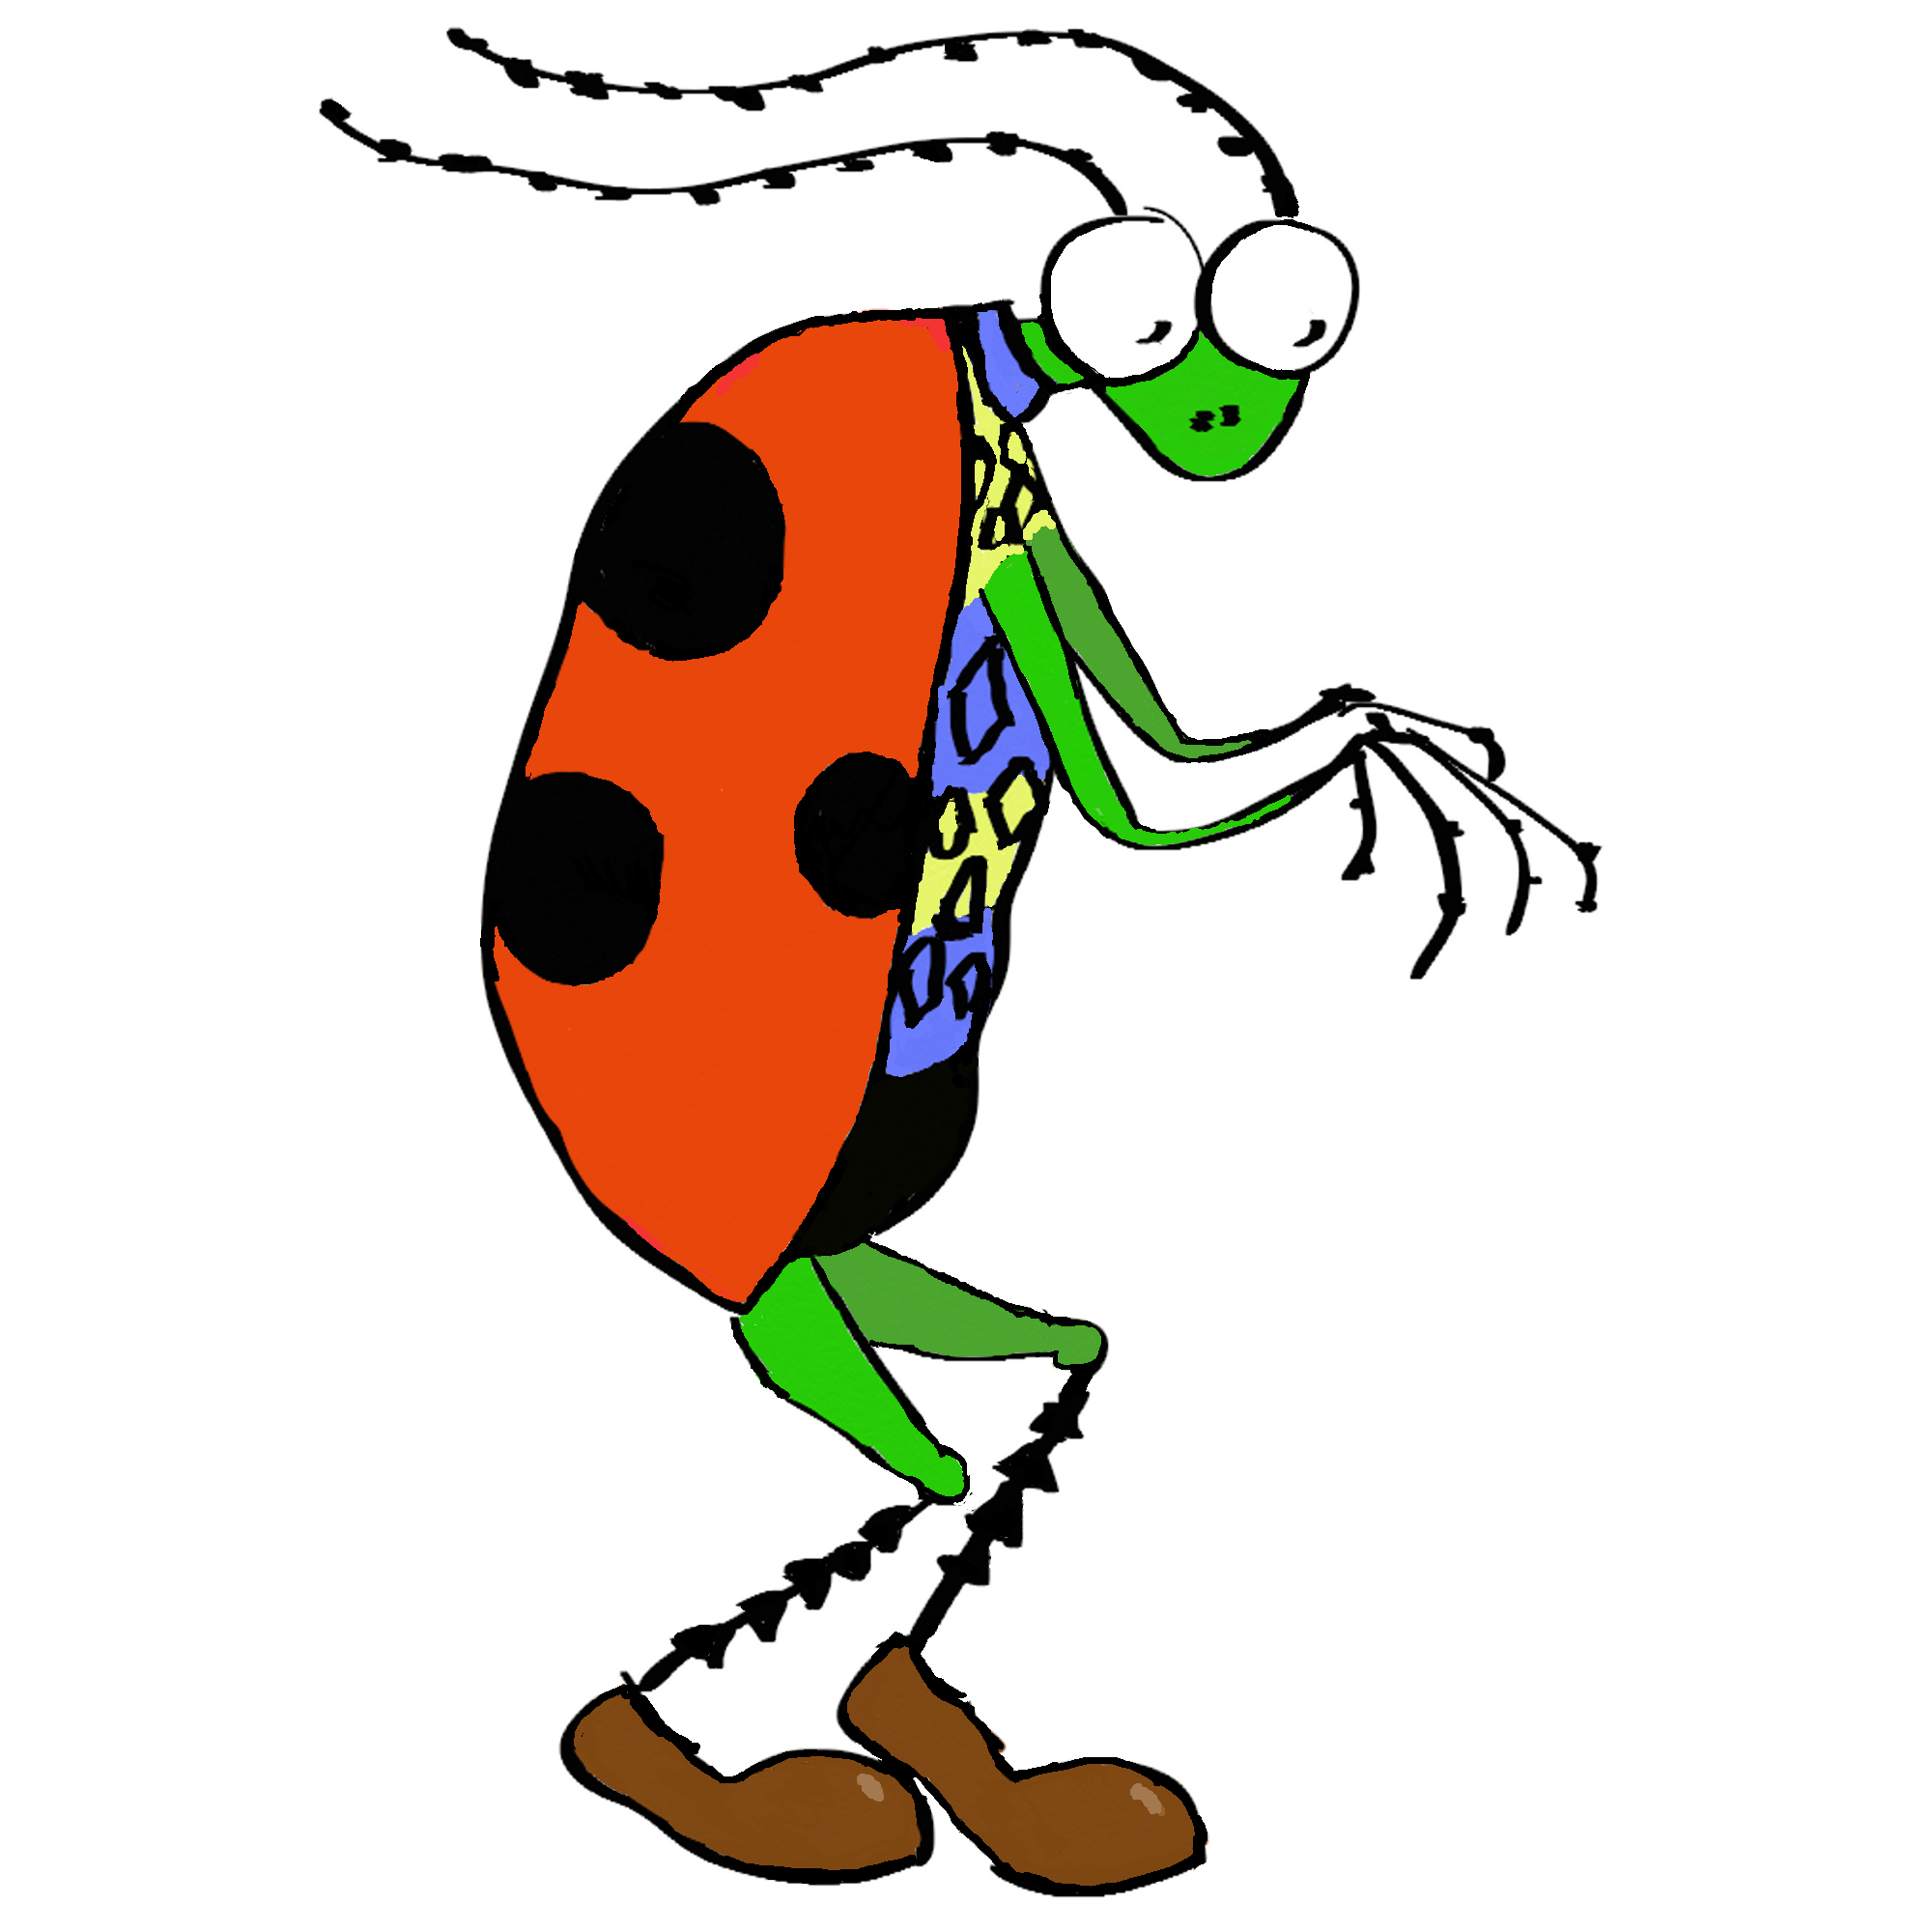 Beetlespank -- a geeky cartoon bug with ladybug spots, big eyes and bony fingers. Wears an argyle sweater.